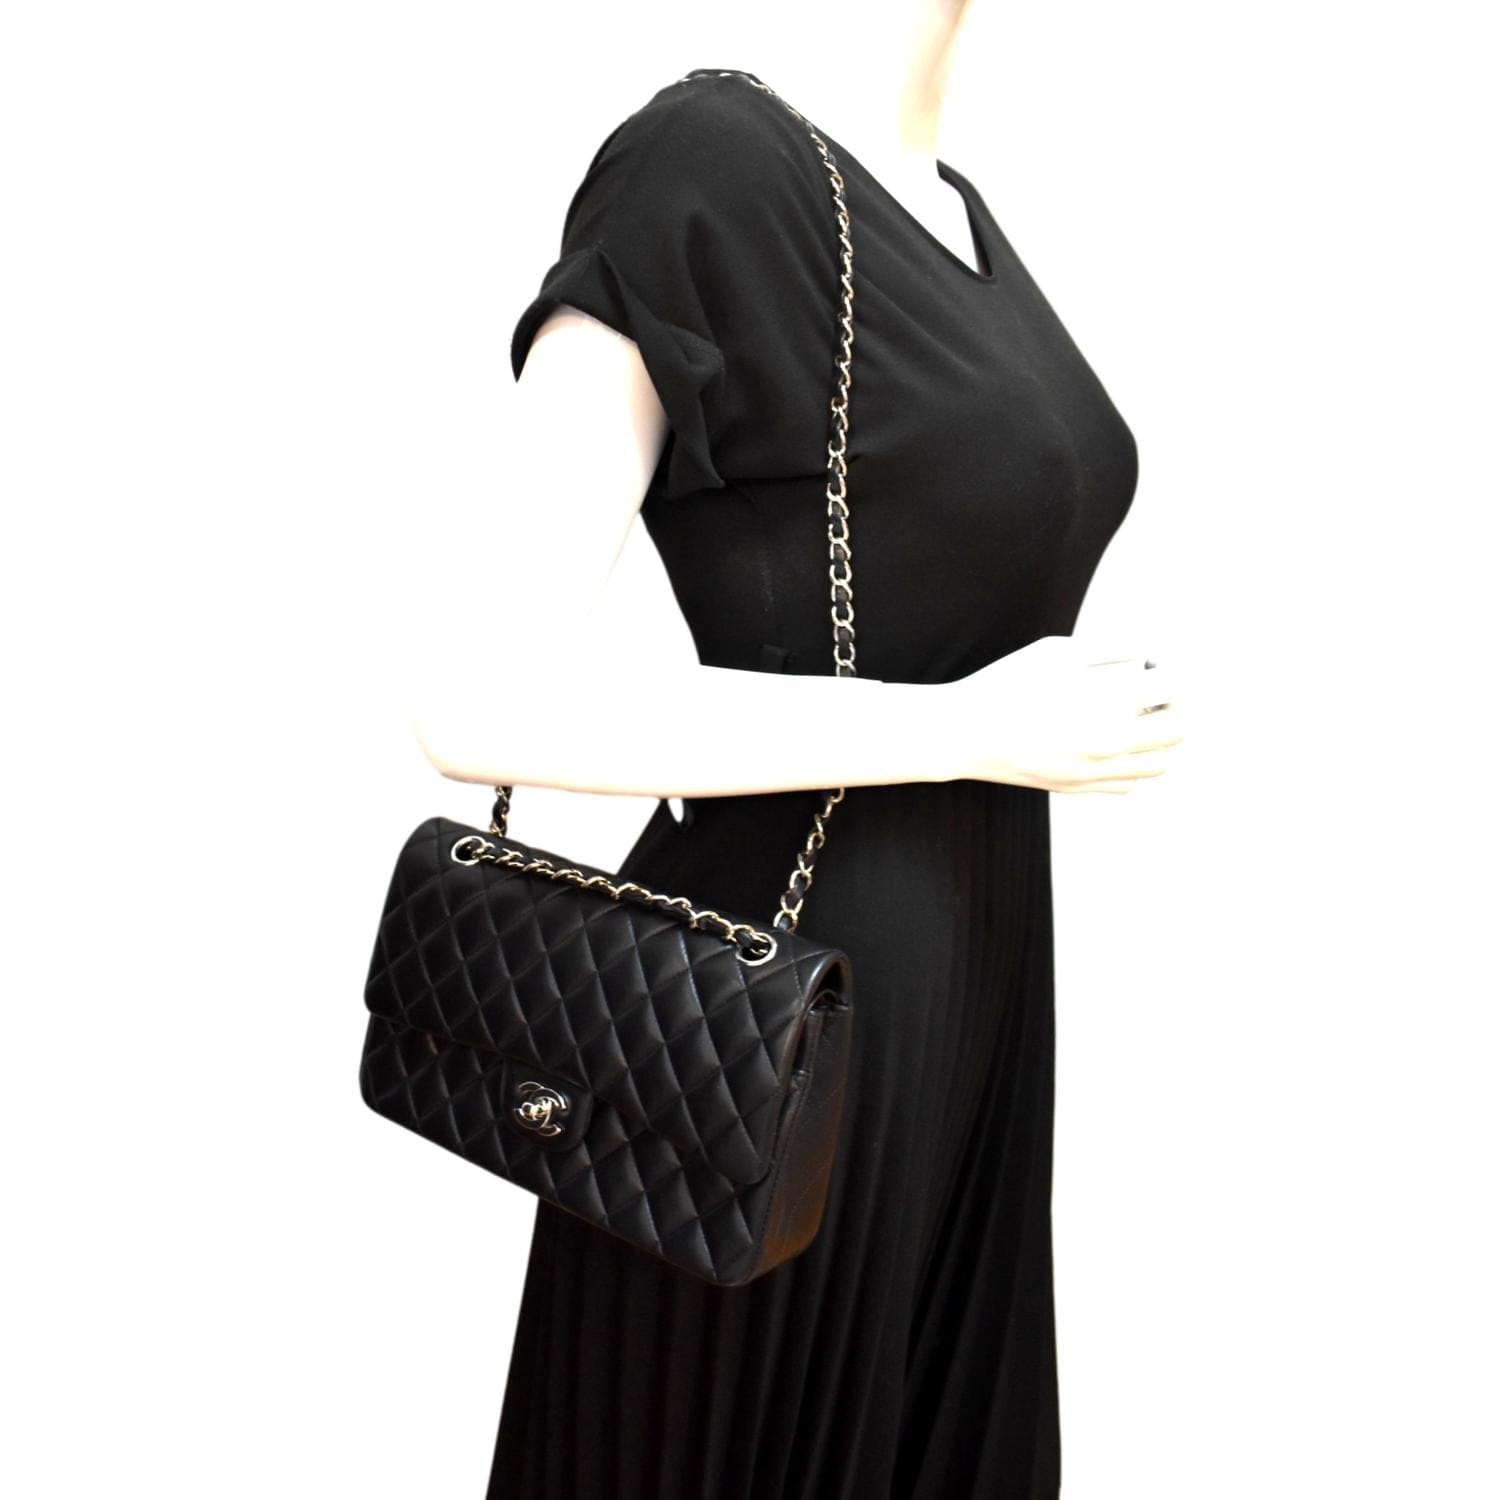 Chanel Classic Medium Double Flap Crossbody Bag